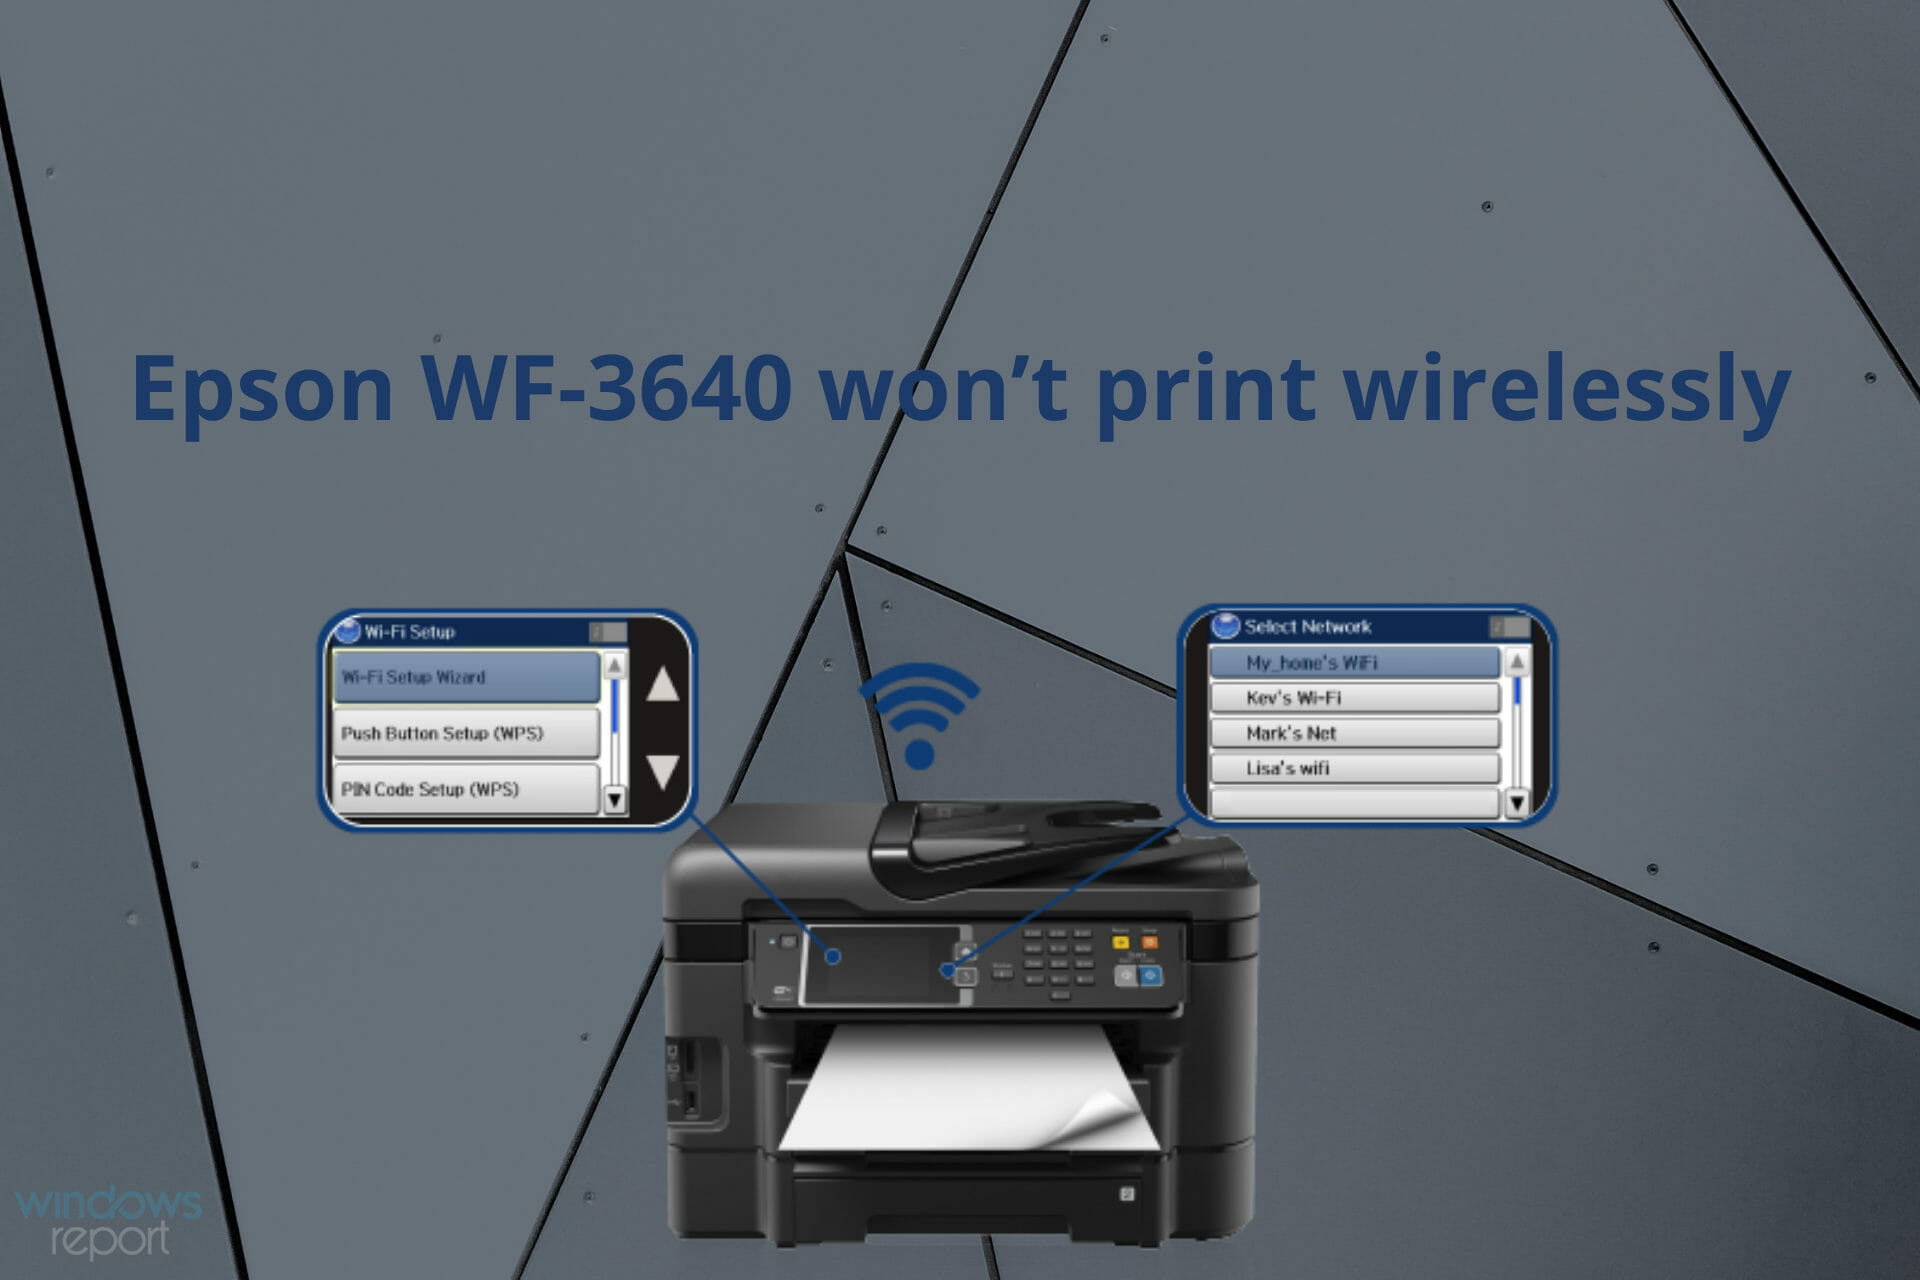 klokke Kunstneriske ubemandede Epson WF-3640 won't print wirelessly [Troubleshooting guide]